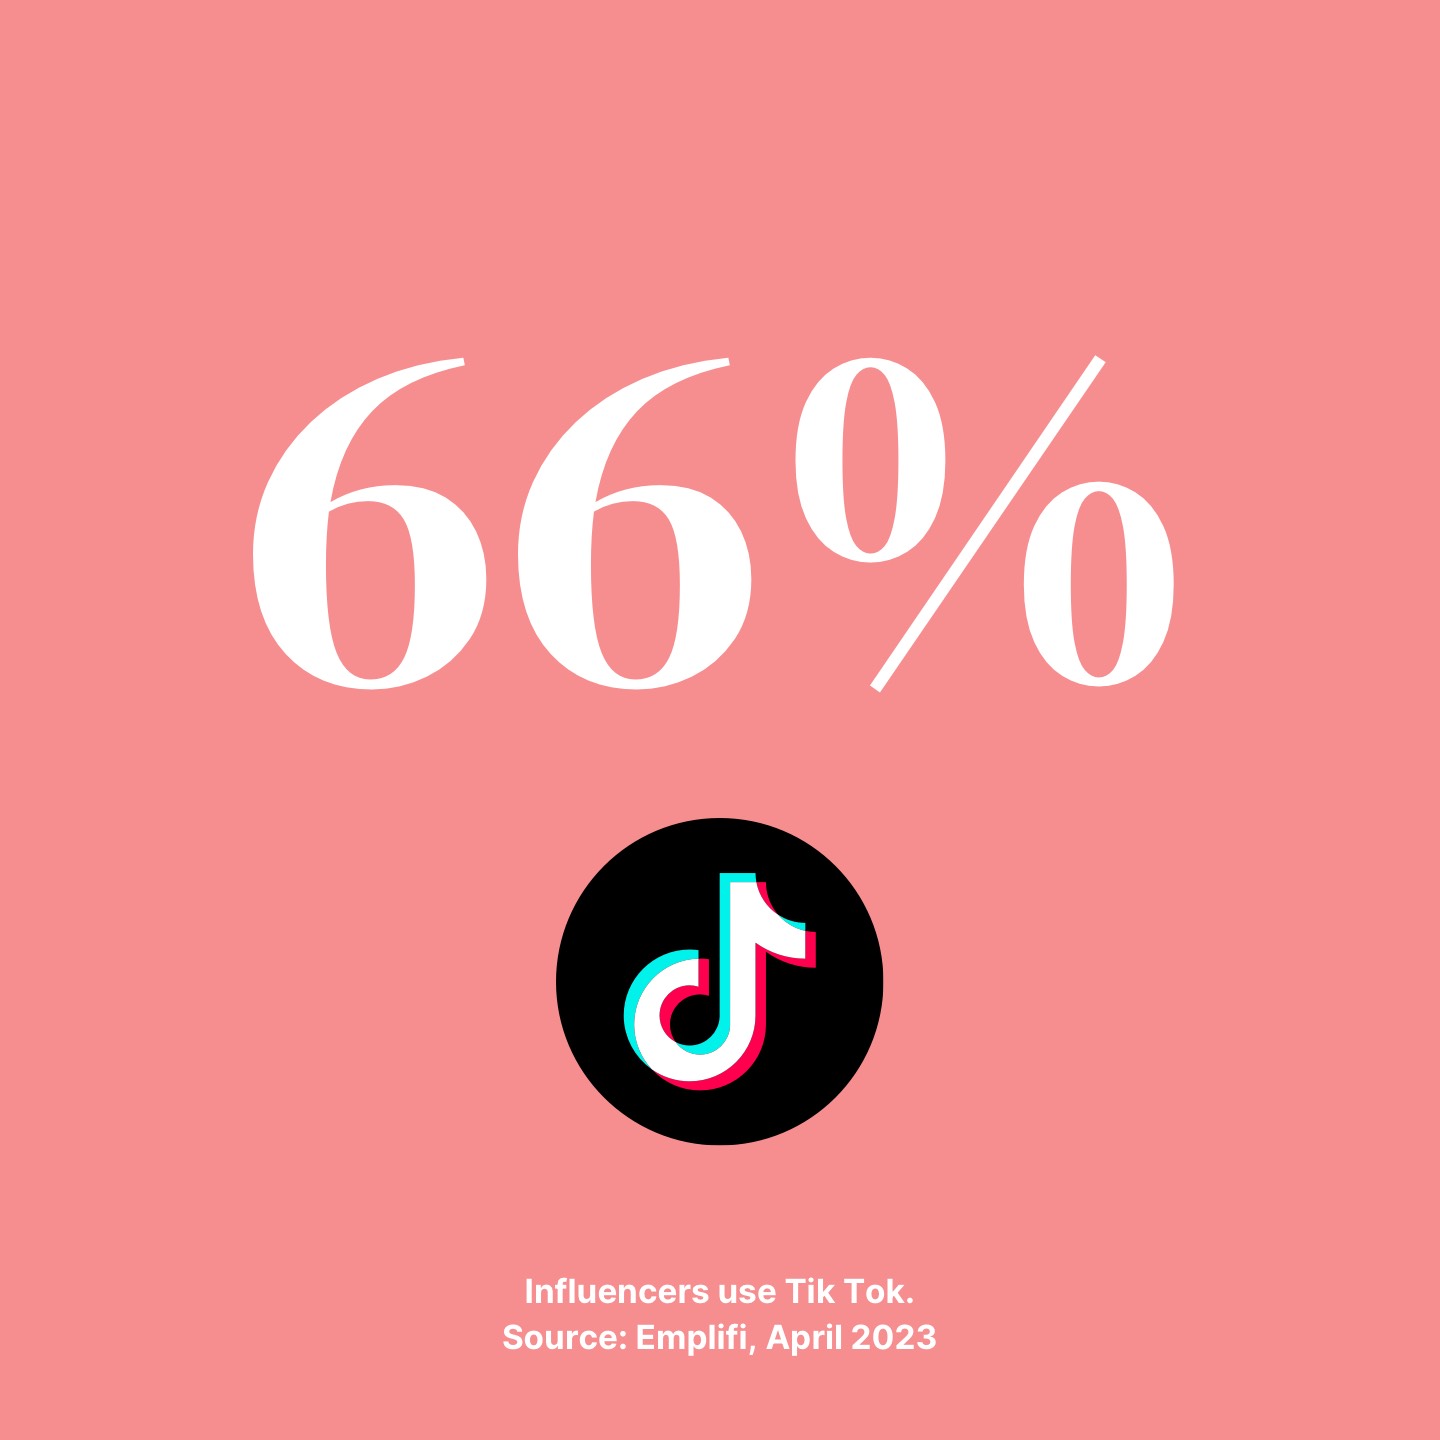 66% of influencers use Tik Tok